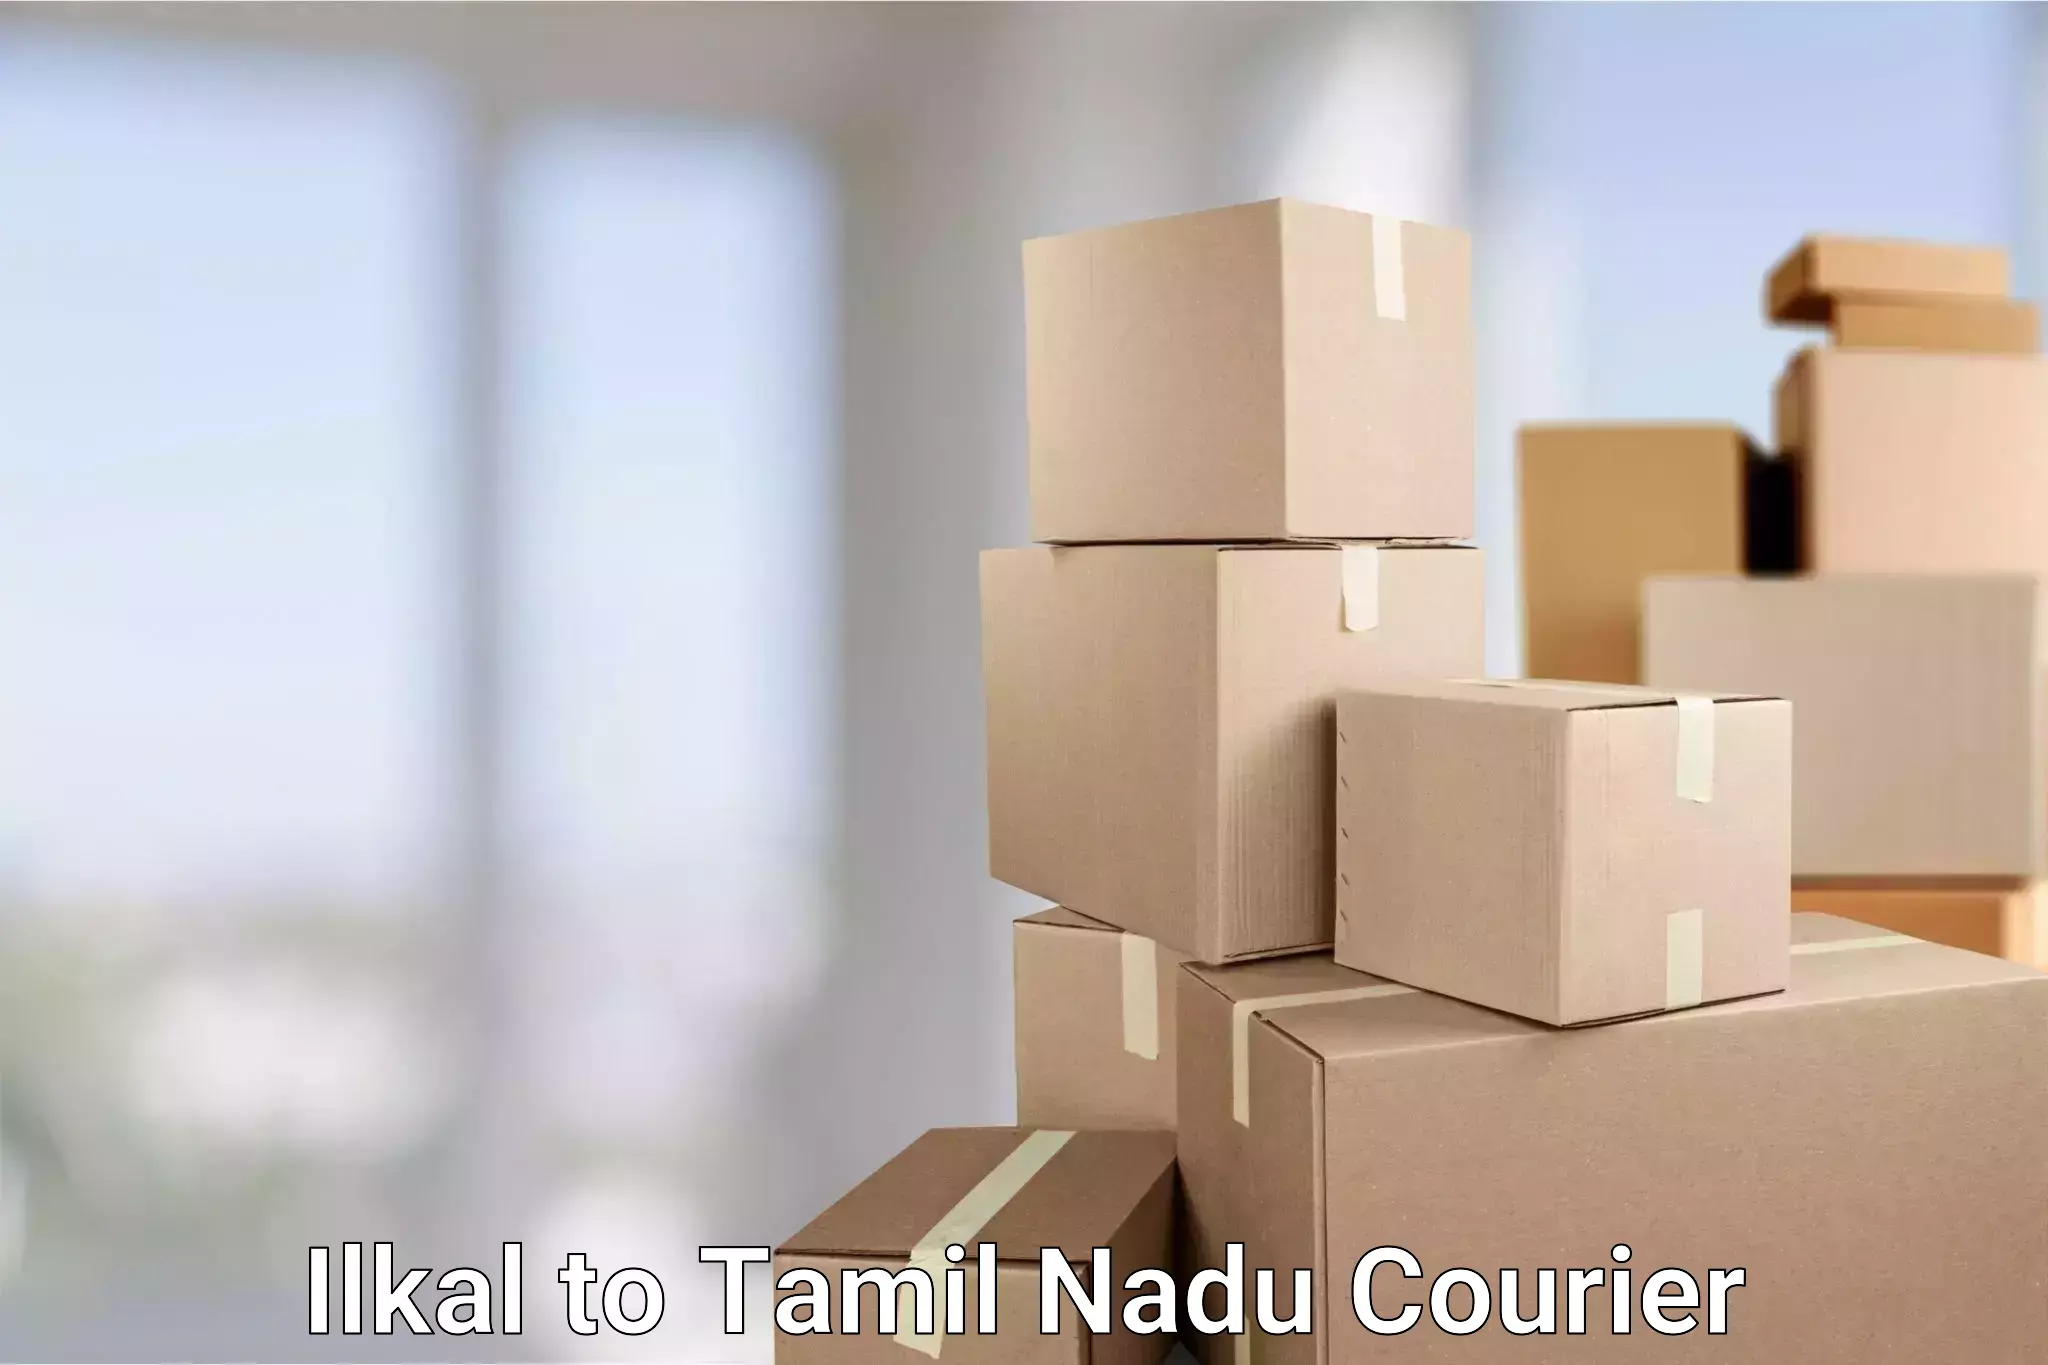 Courier service innovation Ilkal to Ambasamudram